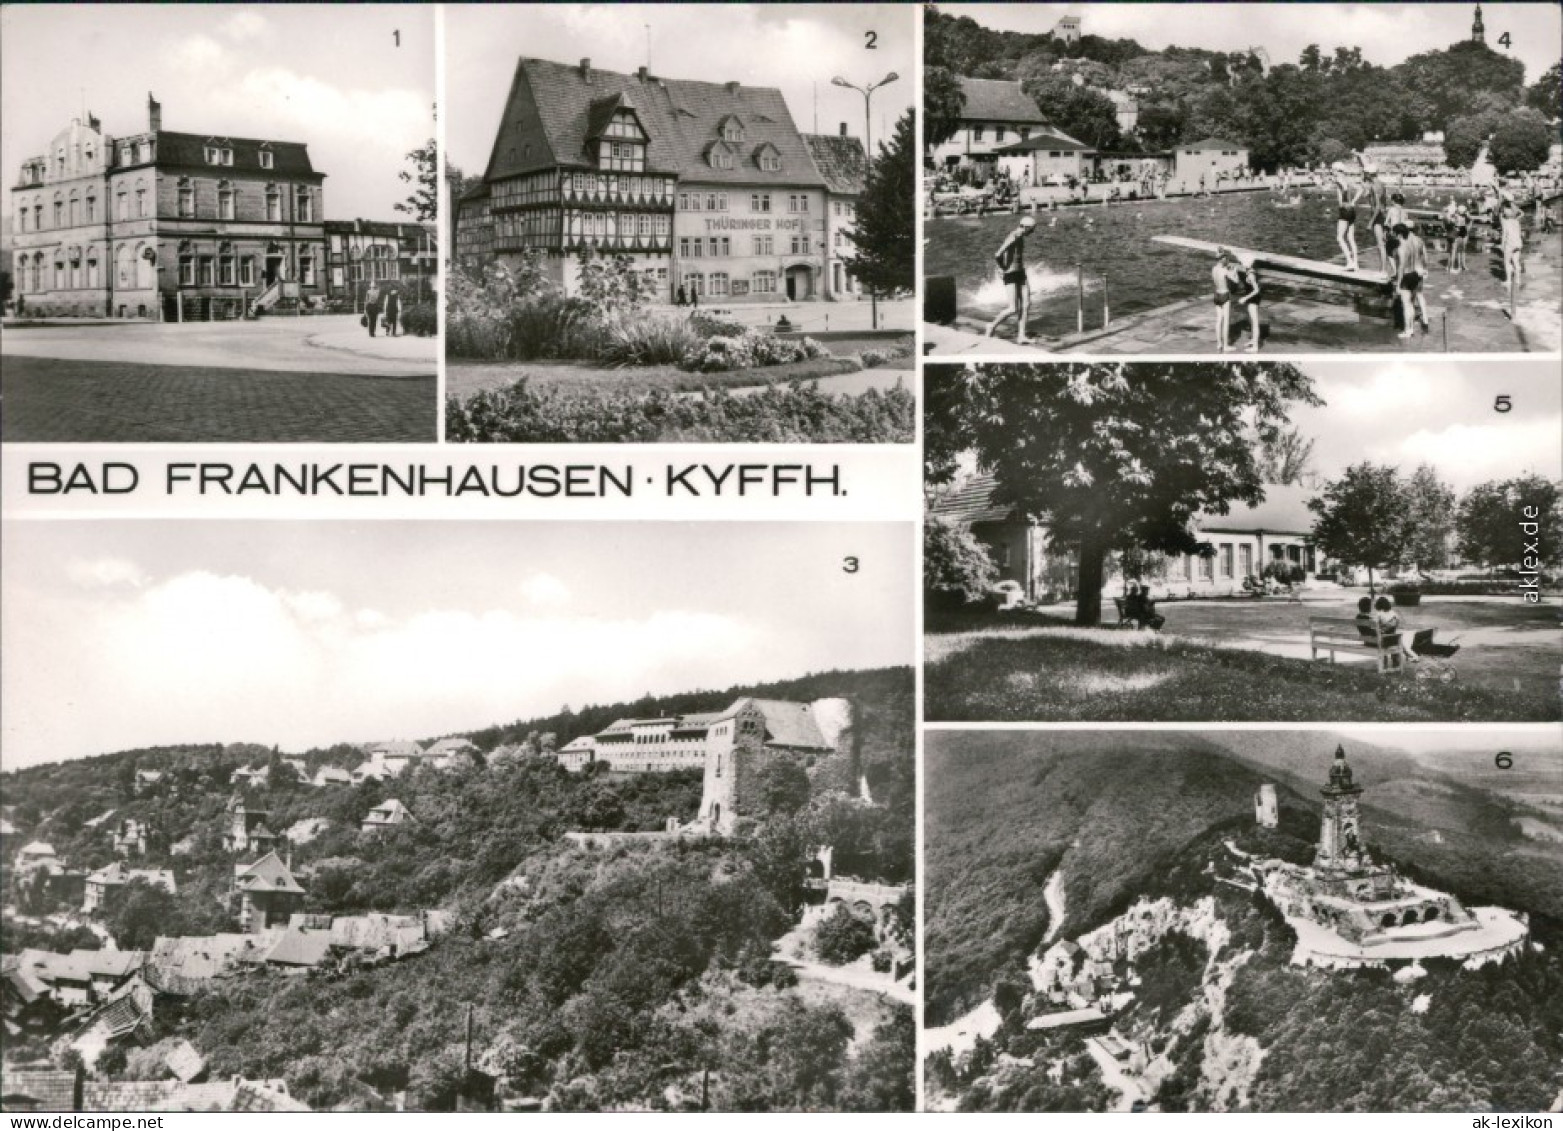 Bad Frankenhausen Jugendherberge, Apotheke, Hausmannsturm Kindersanatorium 1982 - Kyffhaeuser